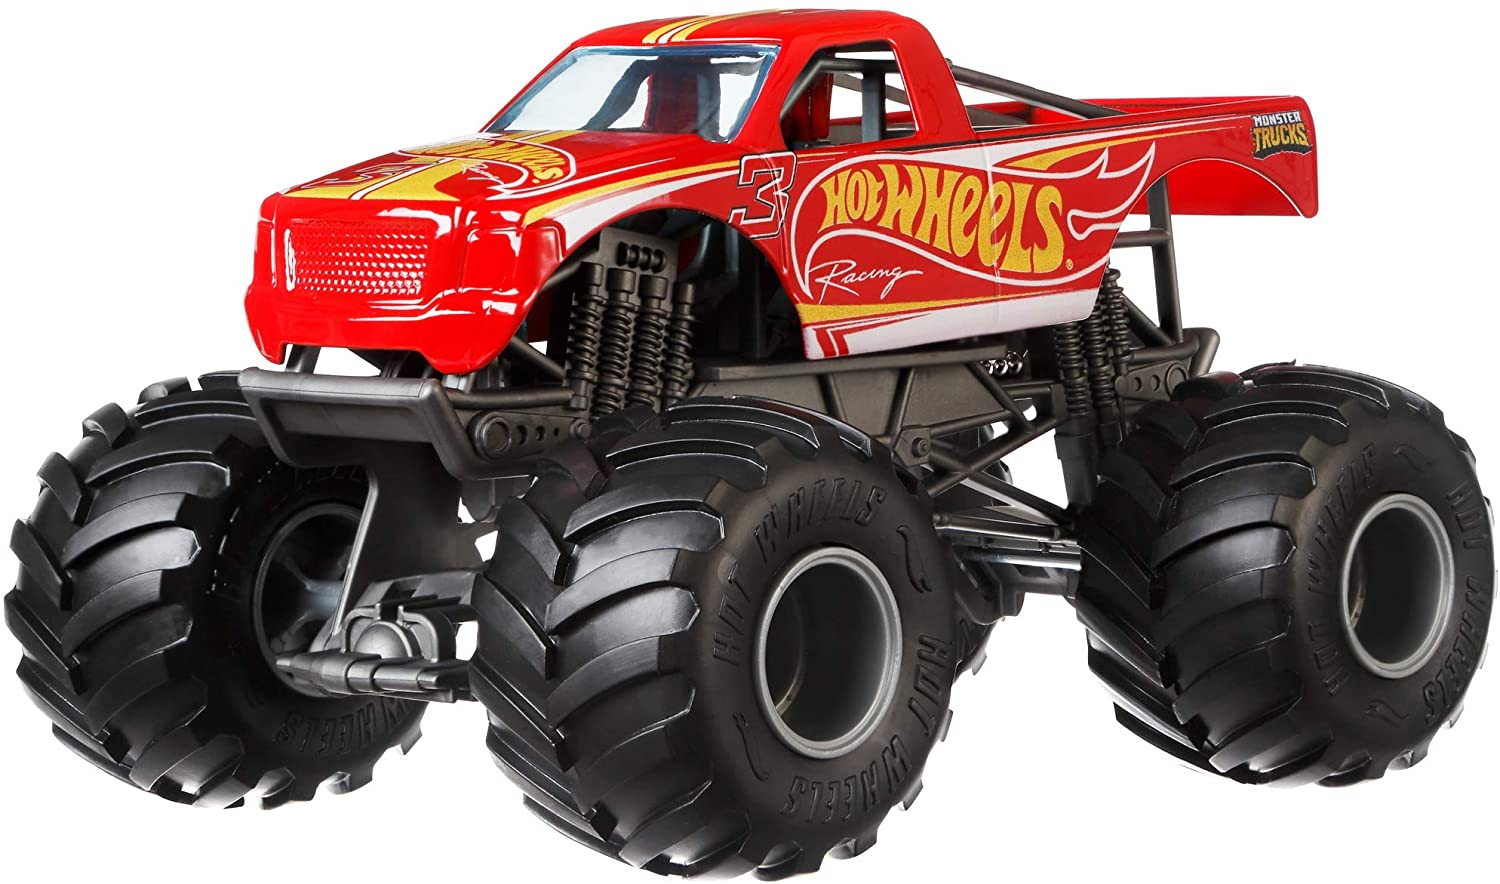 Hot Wheels Gcx14 Monster Trucks 1: 24 Toy Car Die-Cast Toy Car Hot Wheels R